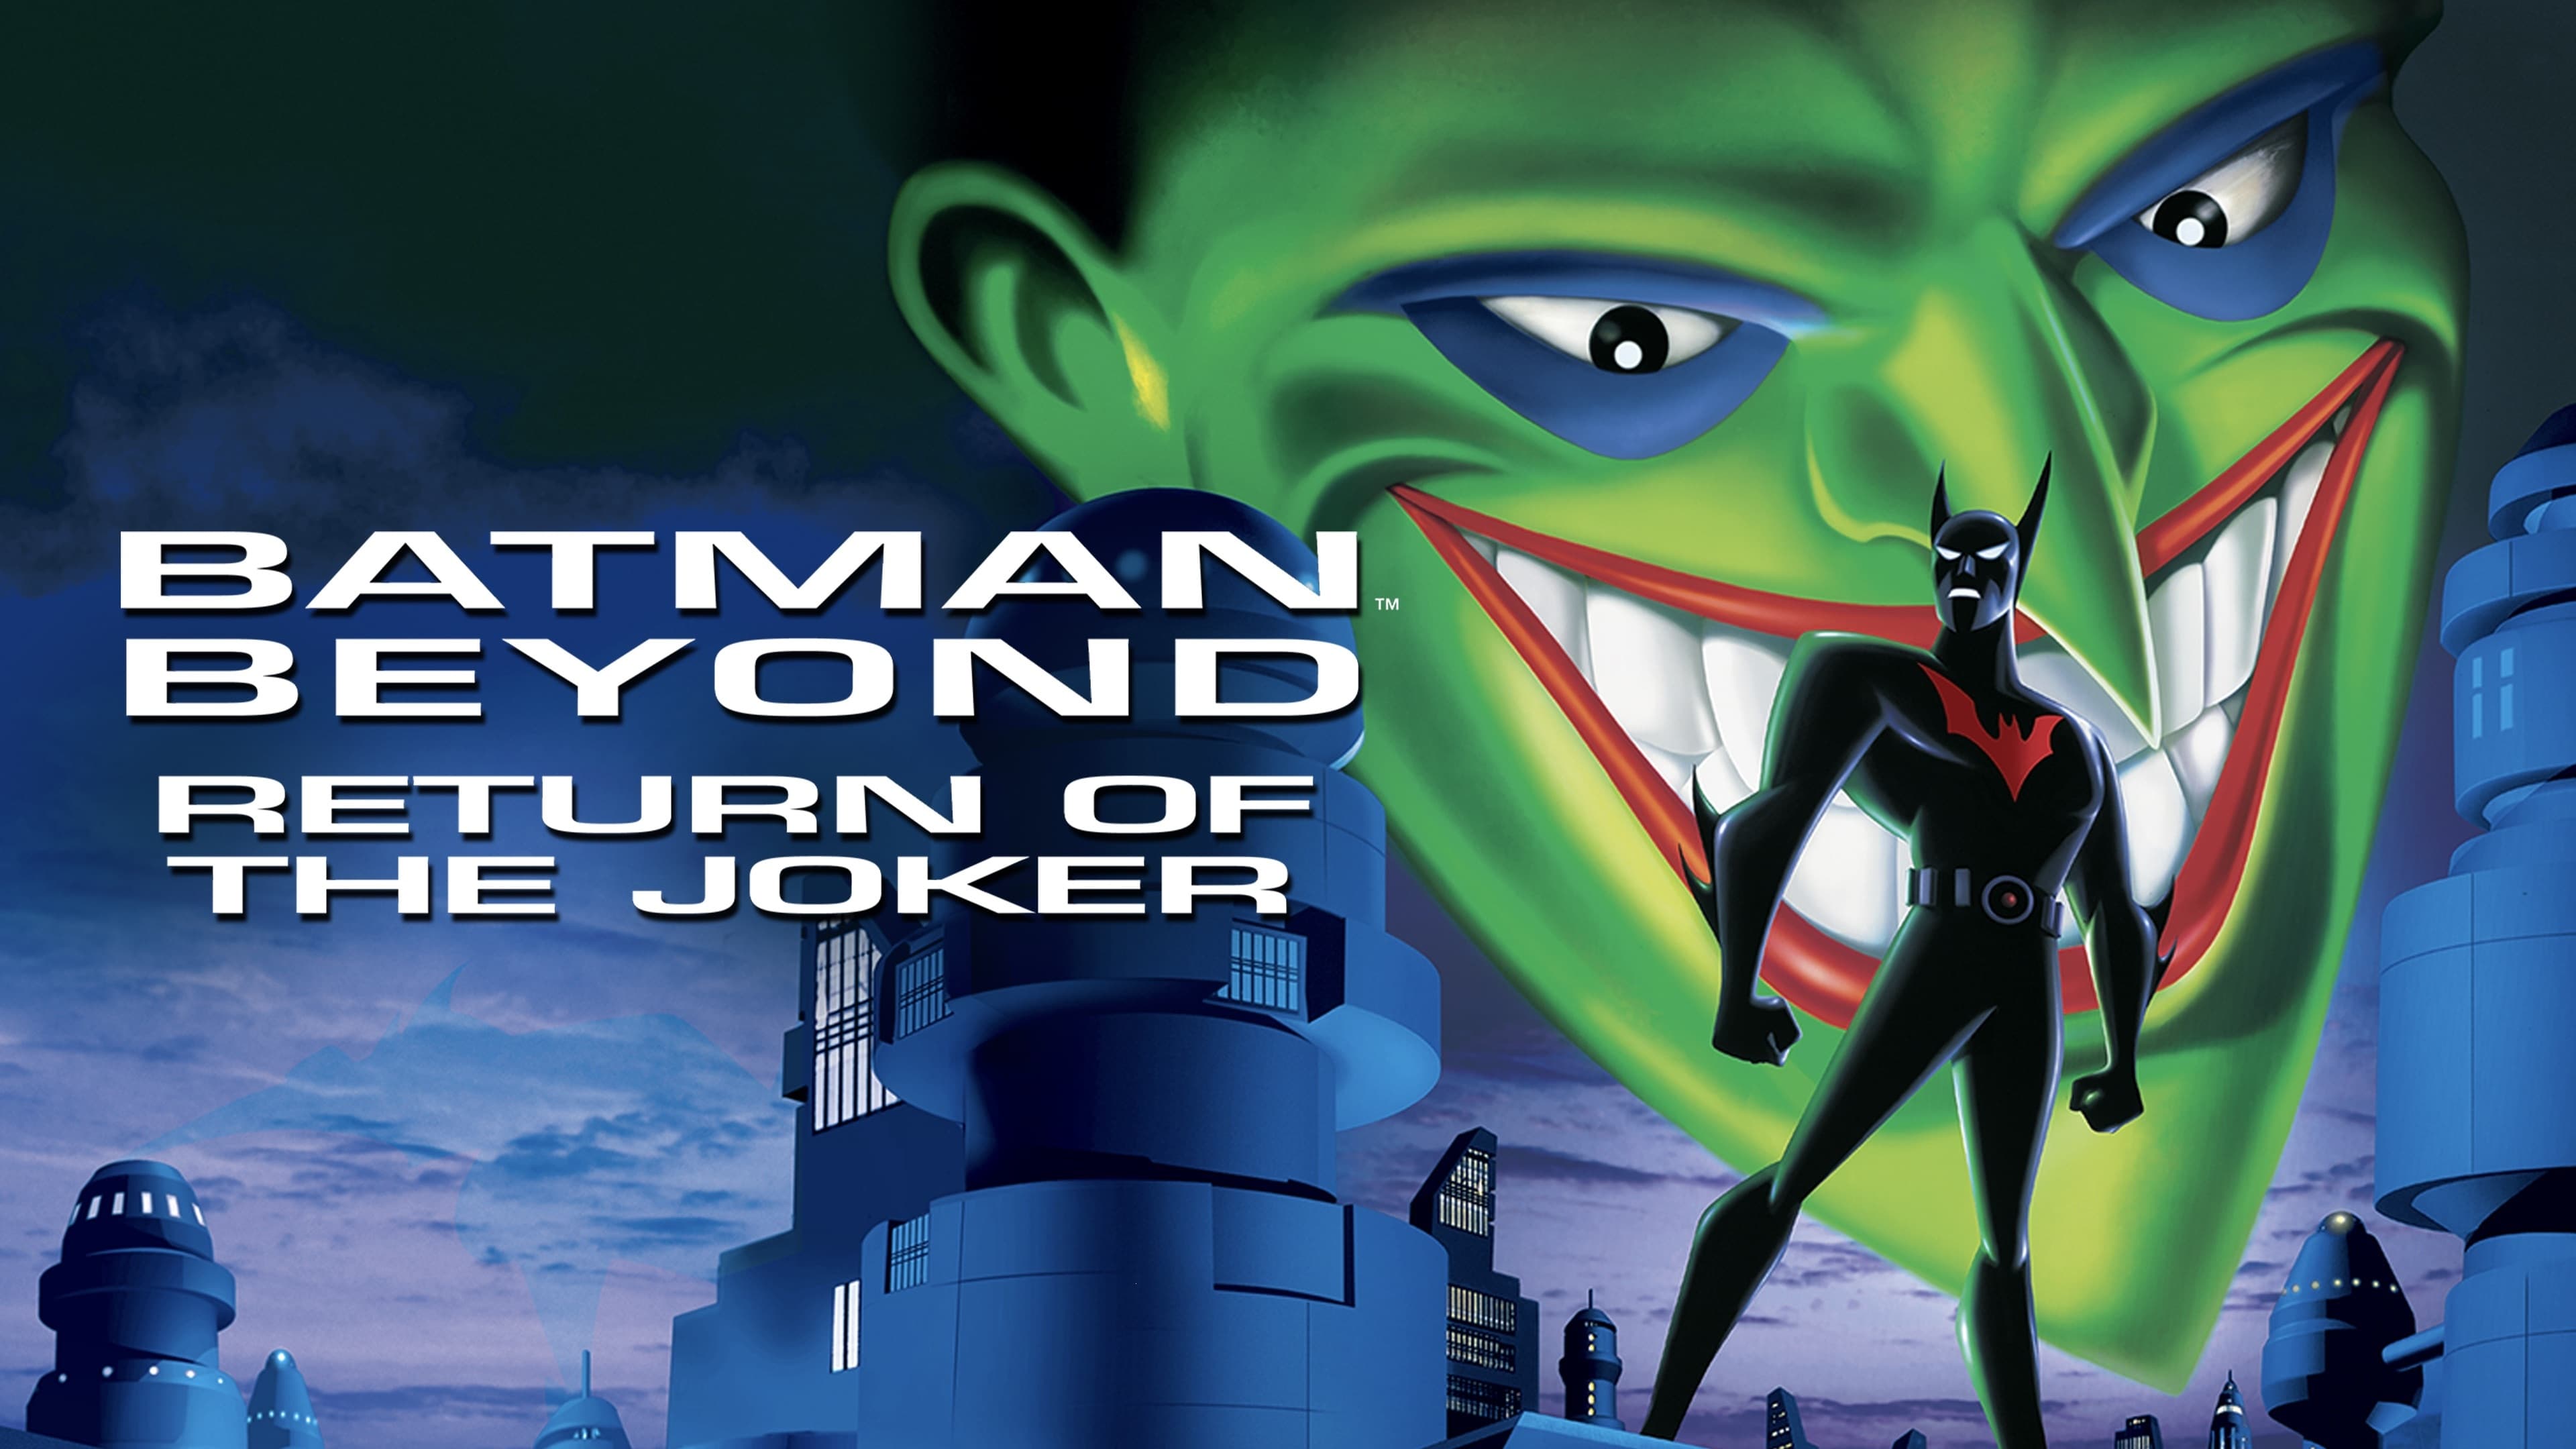 Batman Beyond: Return of the Joker 4k Ultra HD Wallpaper